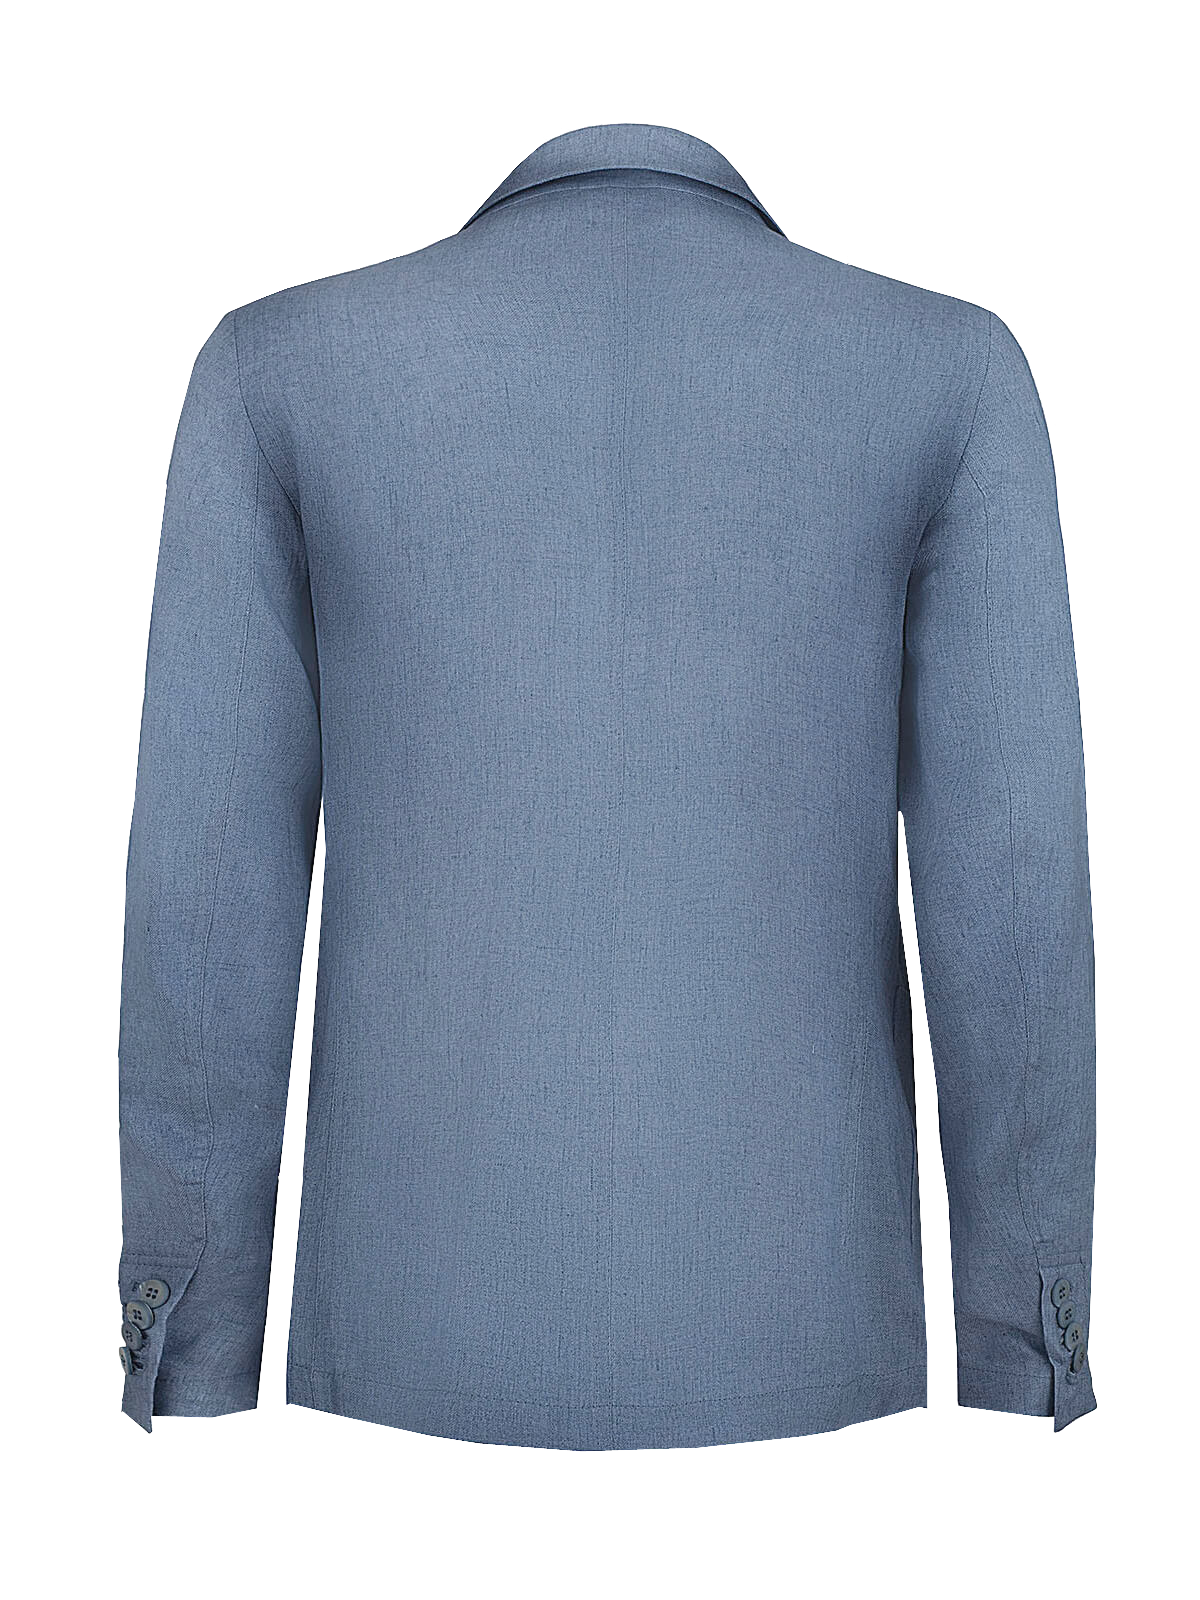 Giacca St. Tropez 100% Capri jeans linen jacket for man  back